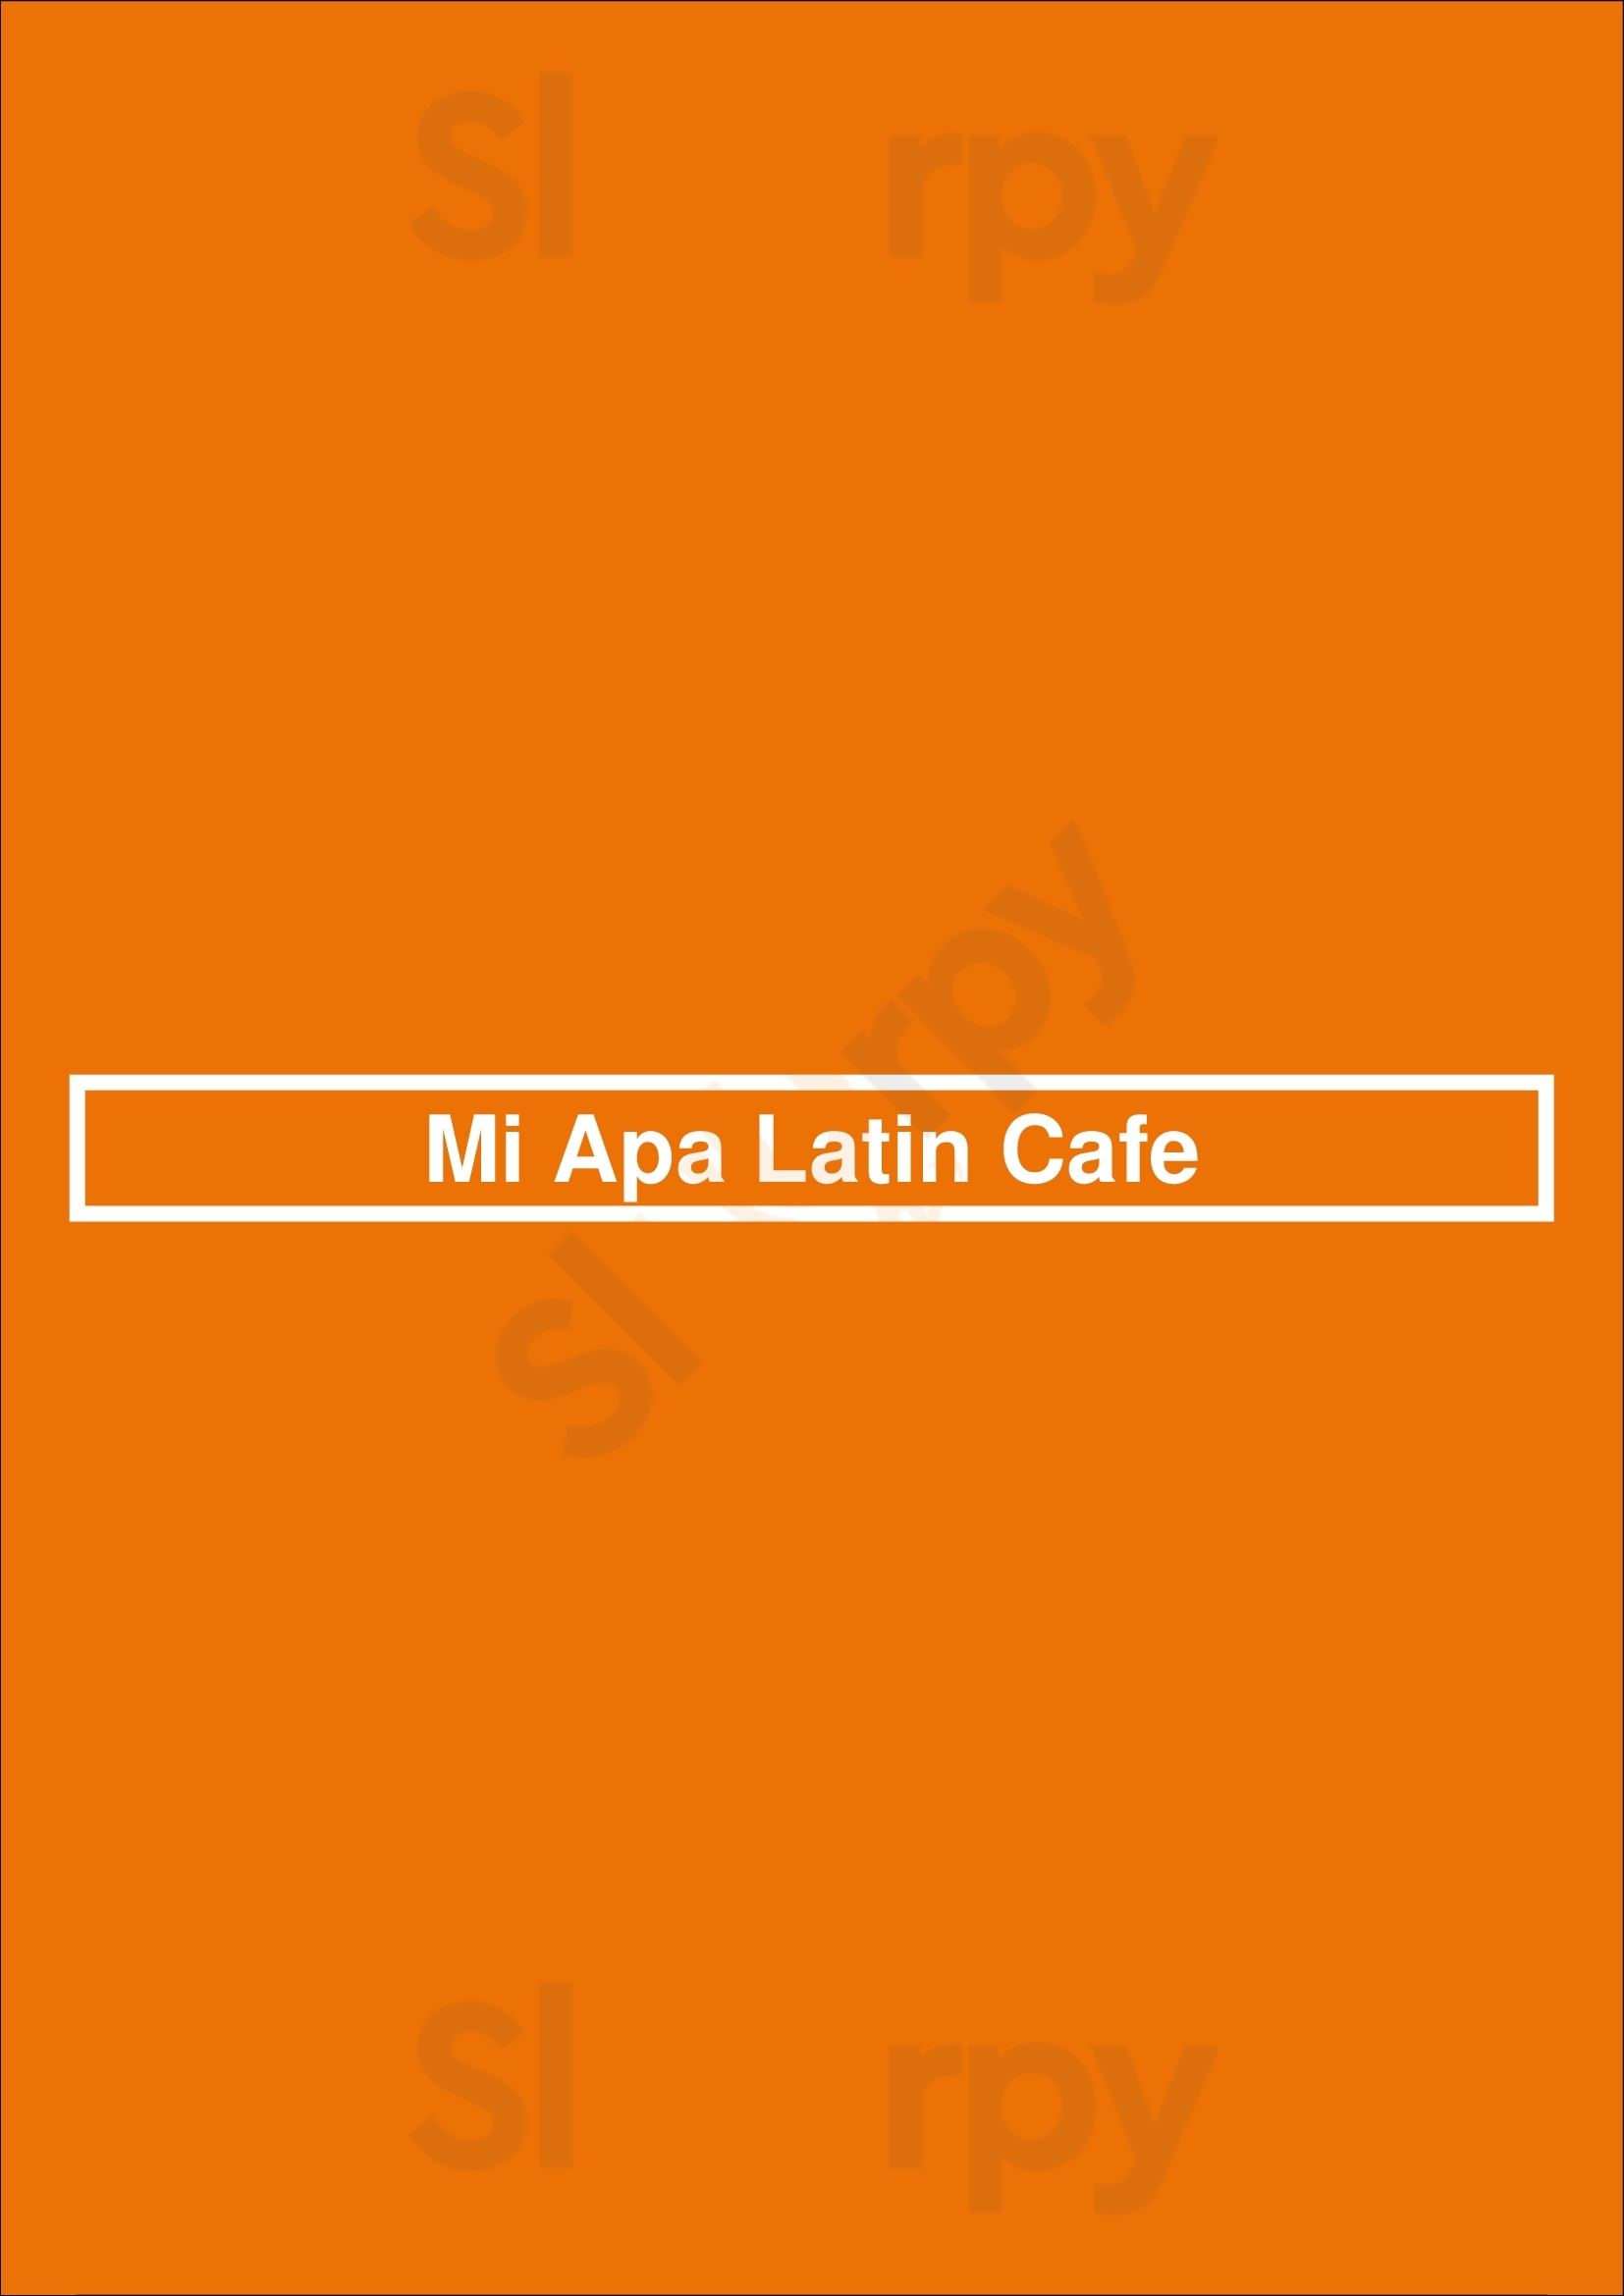 Mi Apa Latin Cafe Gainesville Menu - 1